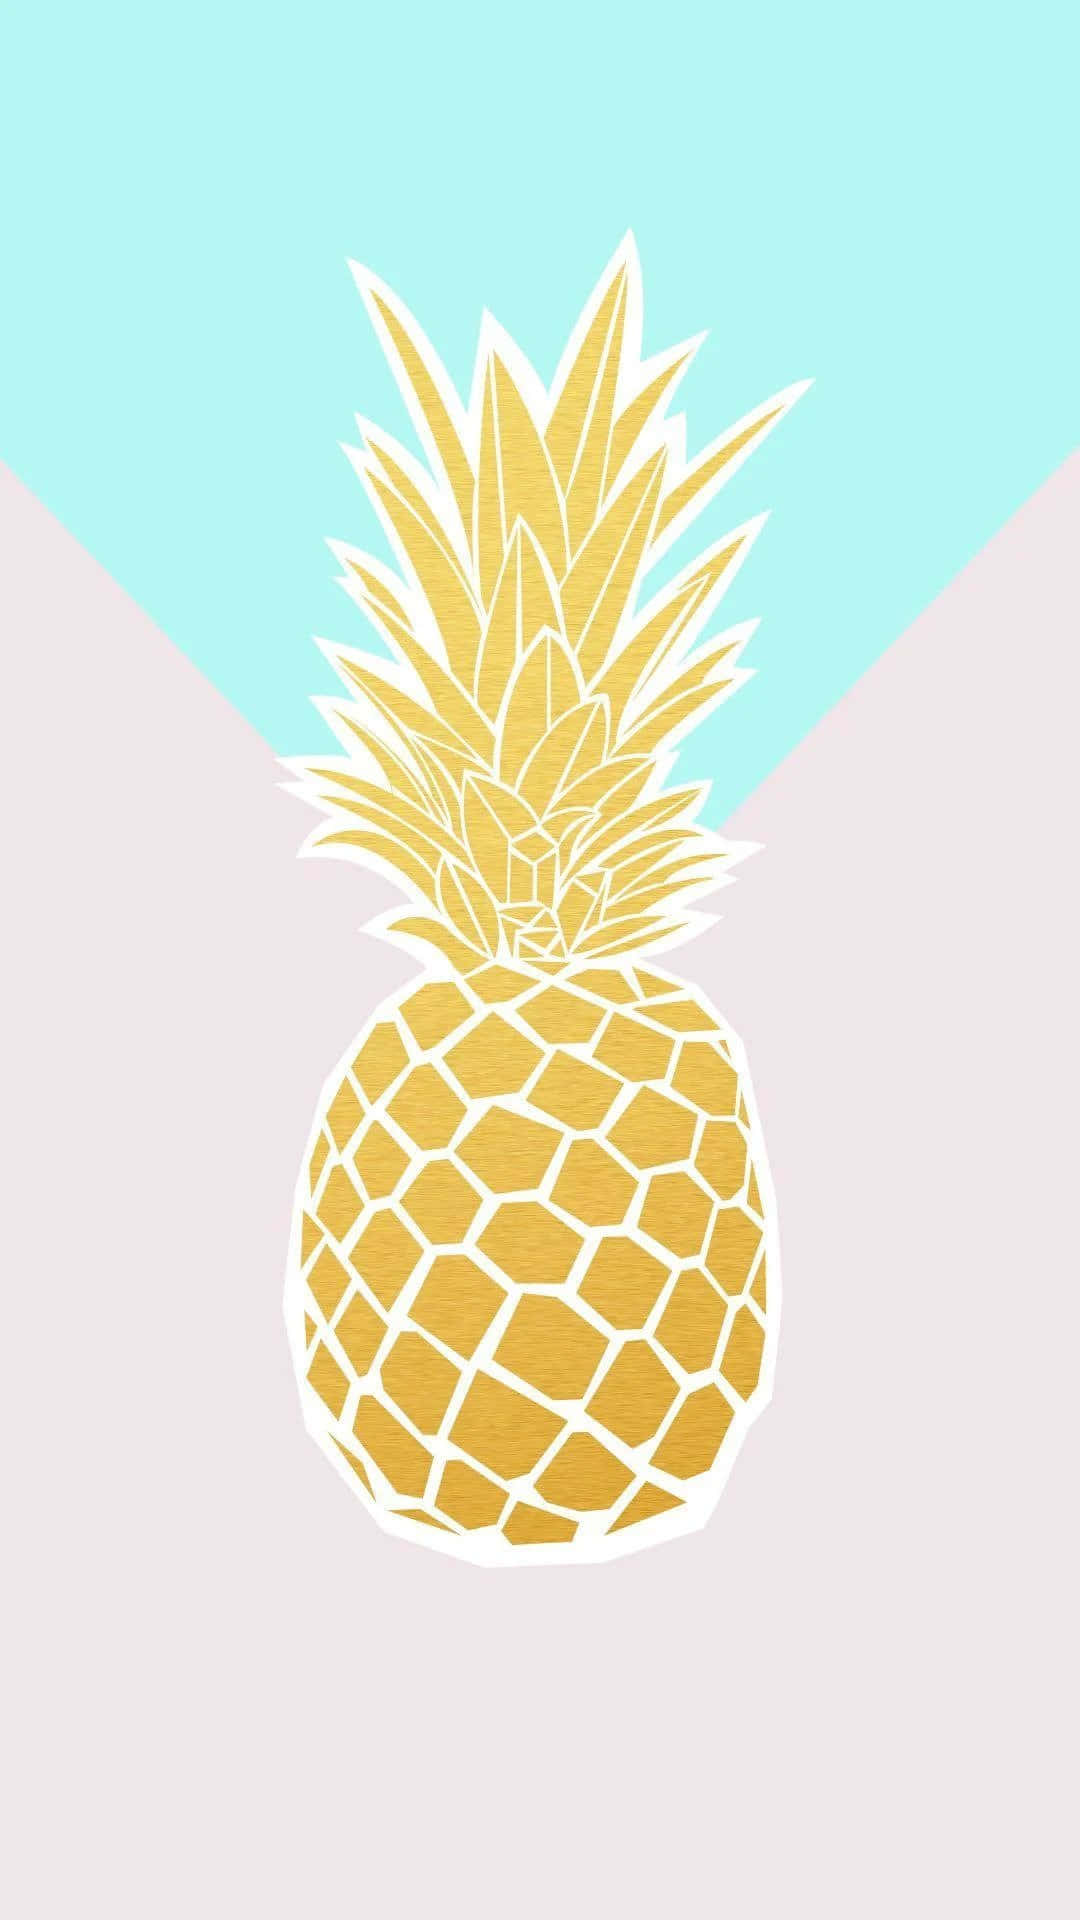 Enjoying a Sweet&Juicy Pineapple!